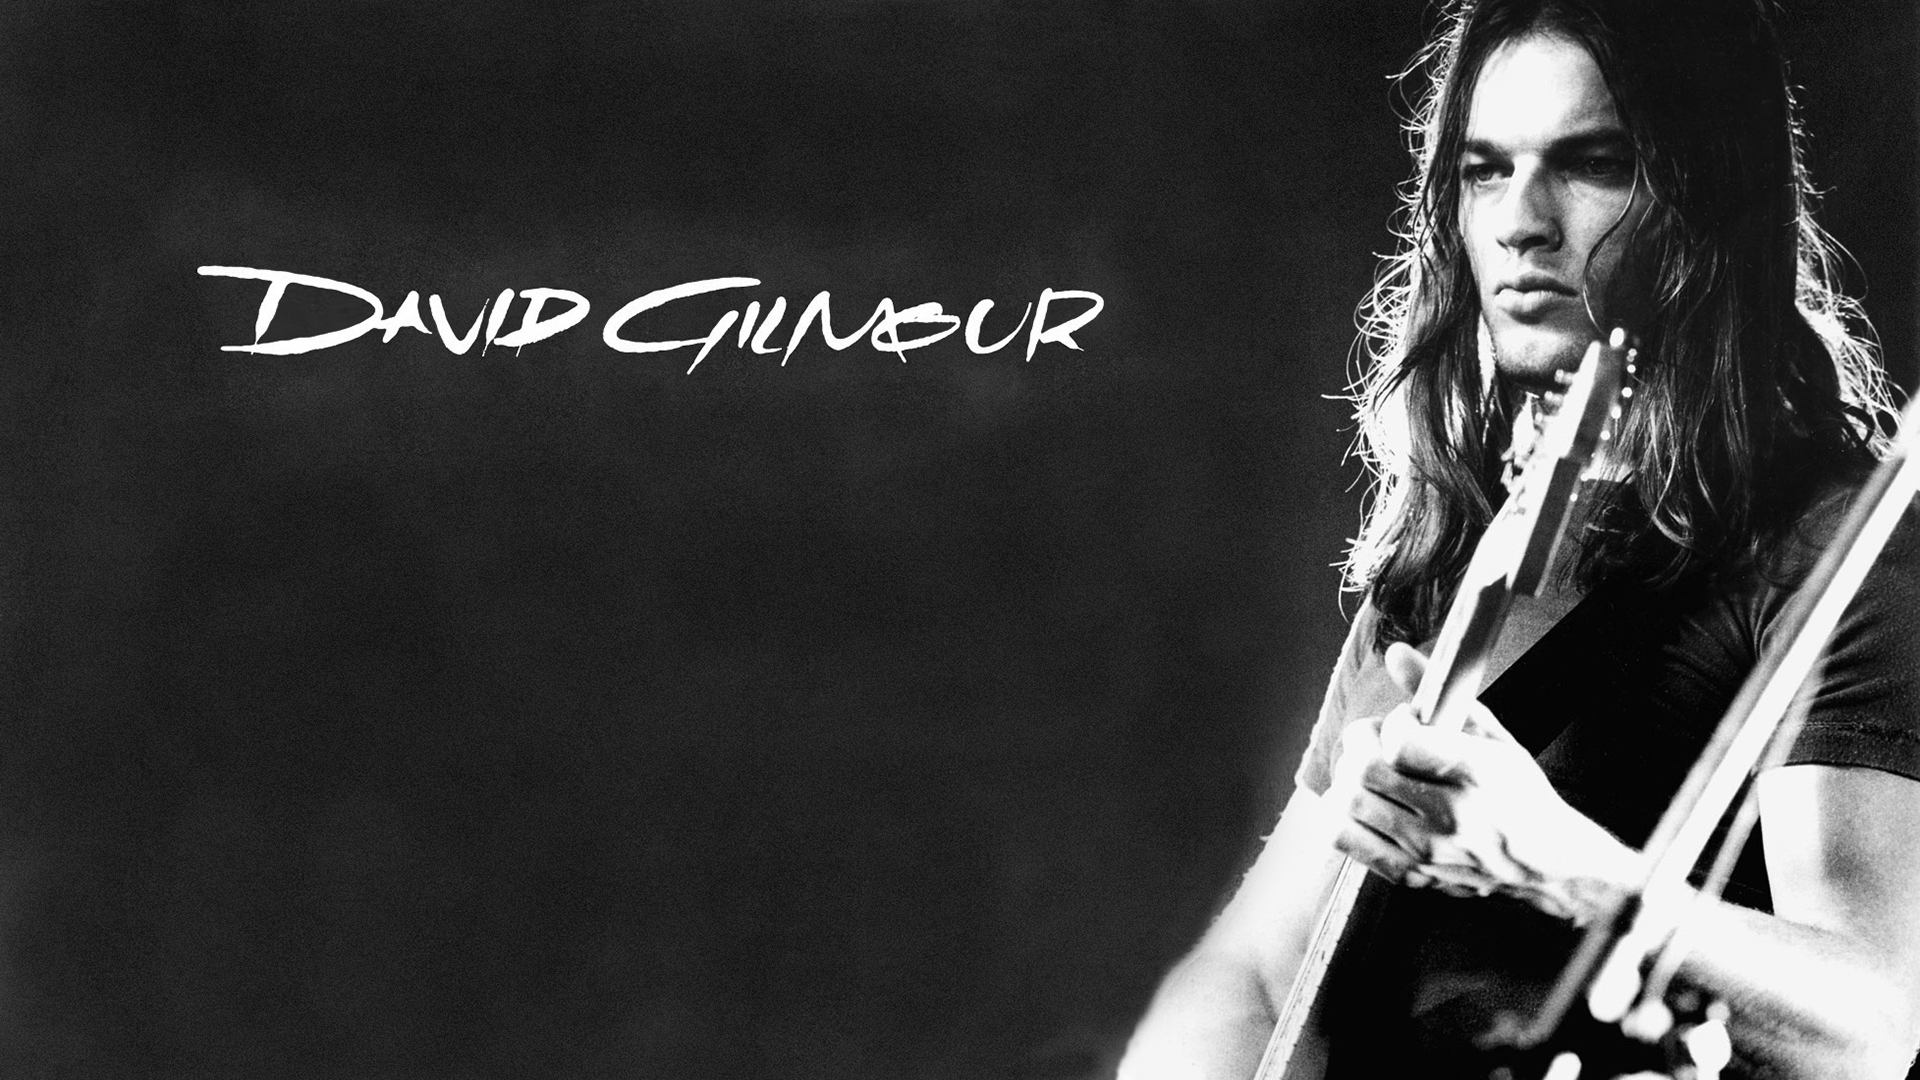 Pink Floyd BW David Gilmour wallpaper 1920x1080 85394 1920x1080